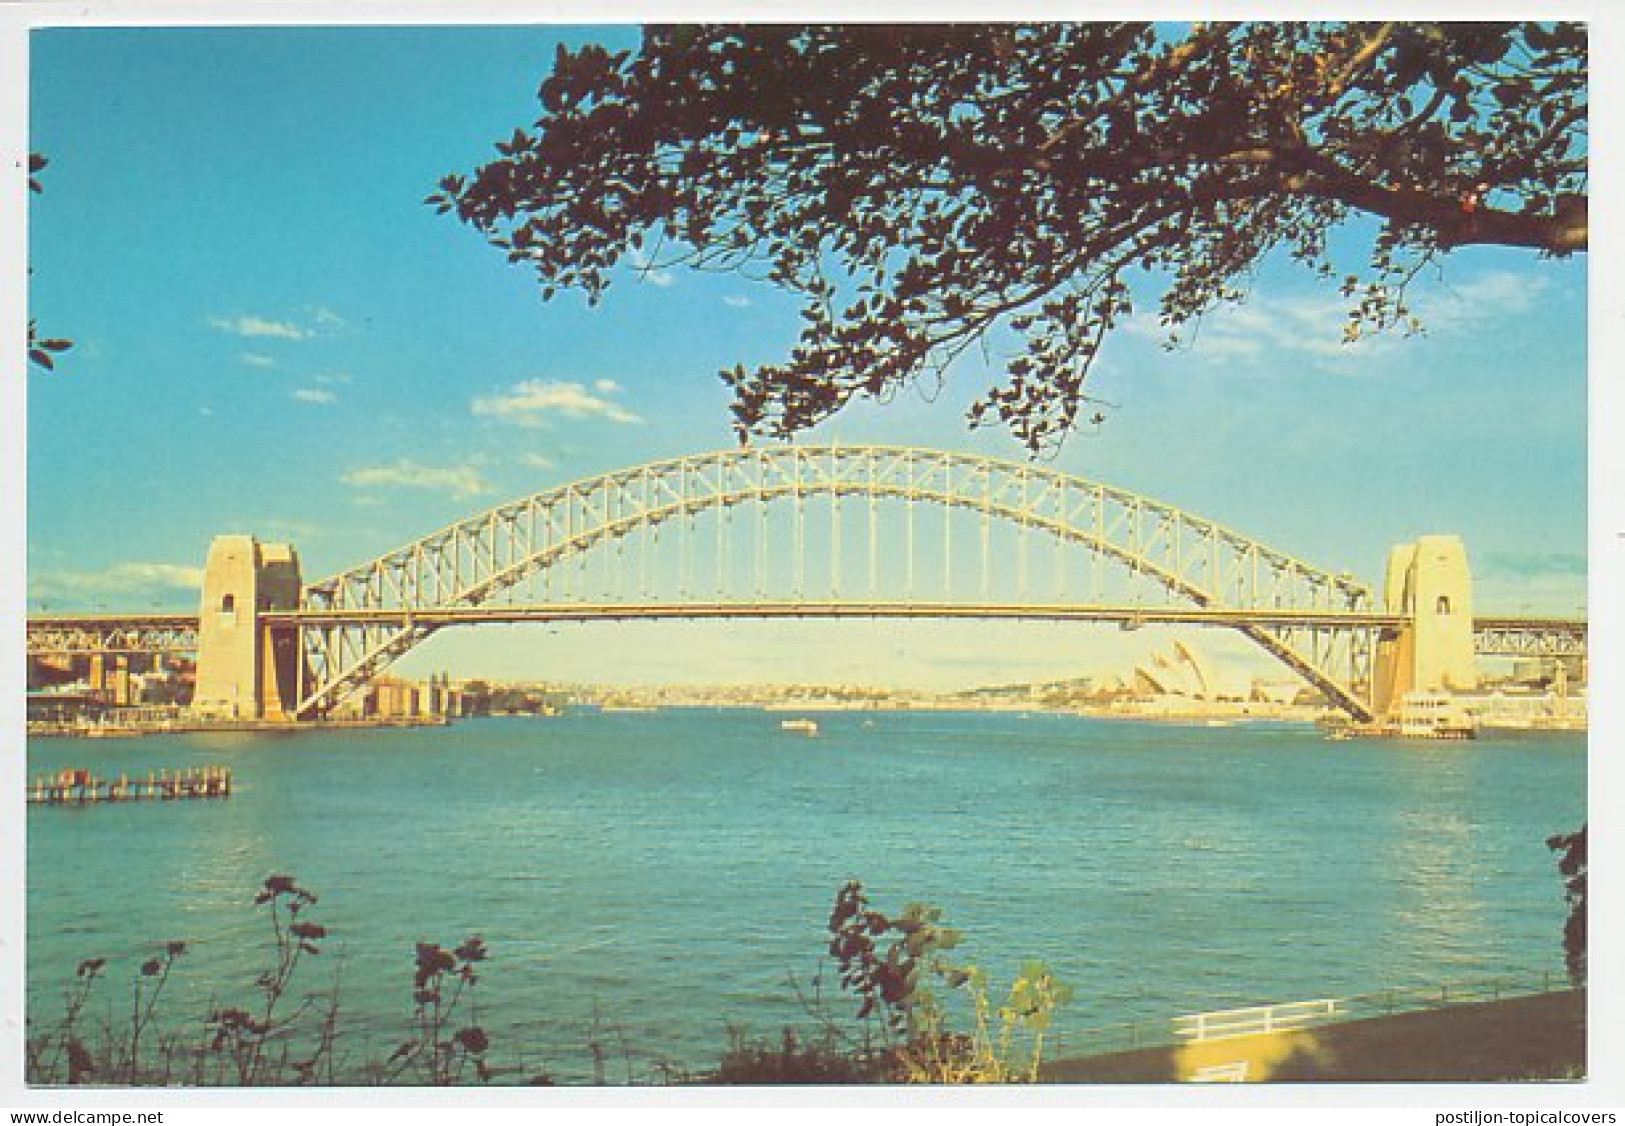 Postal Stationery Australia Harbour Bridge - Sydney - Bridges